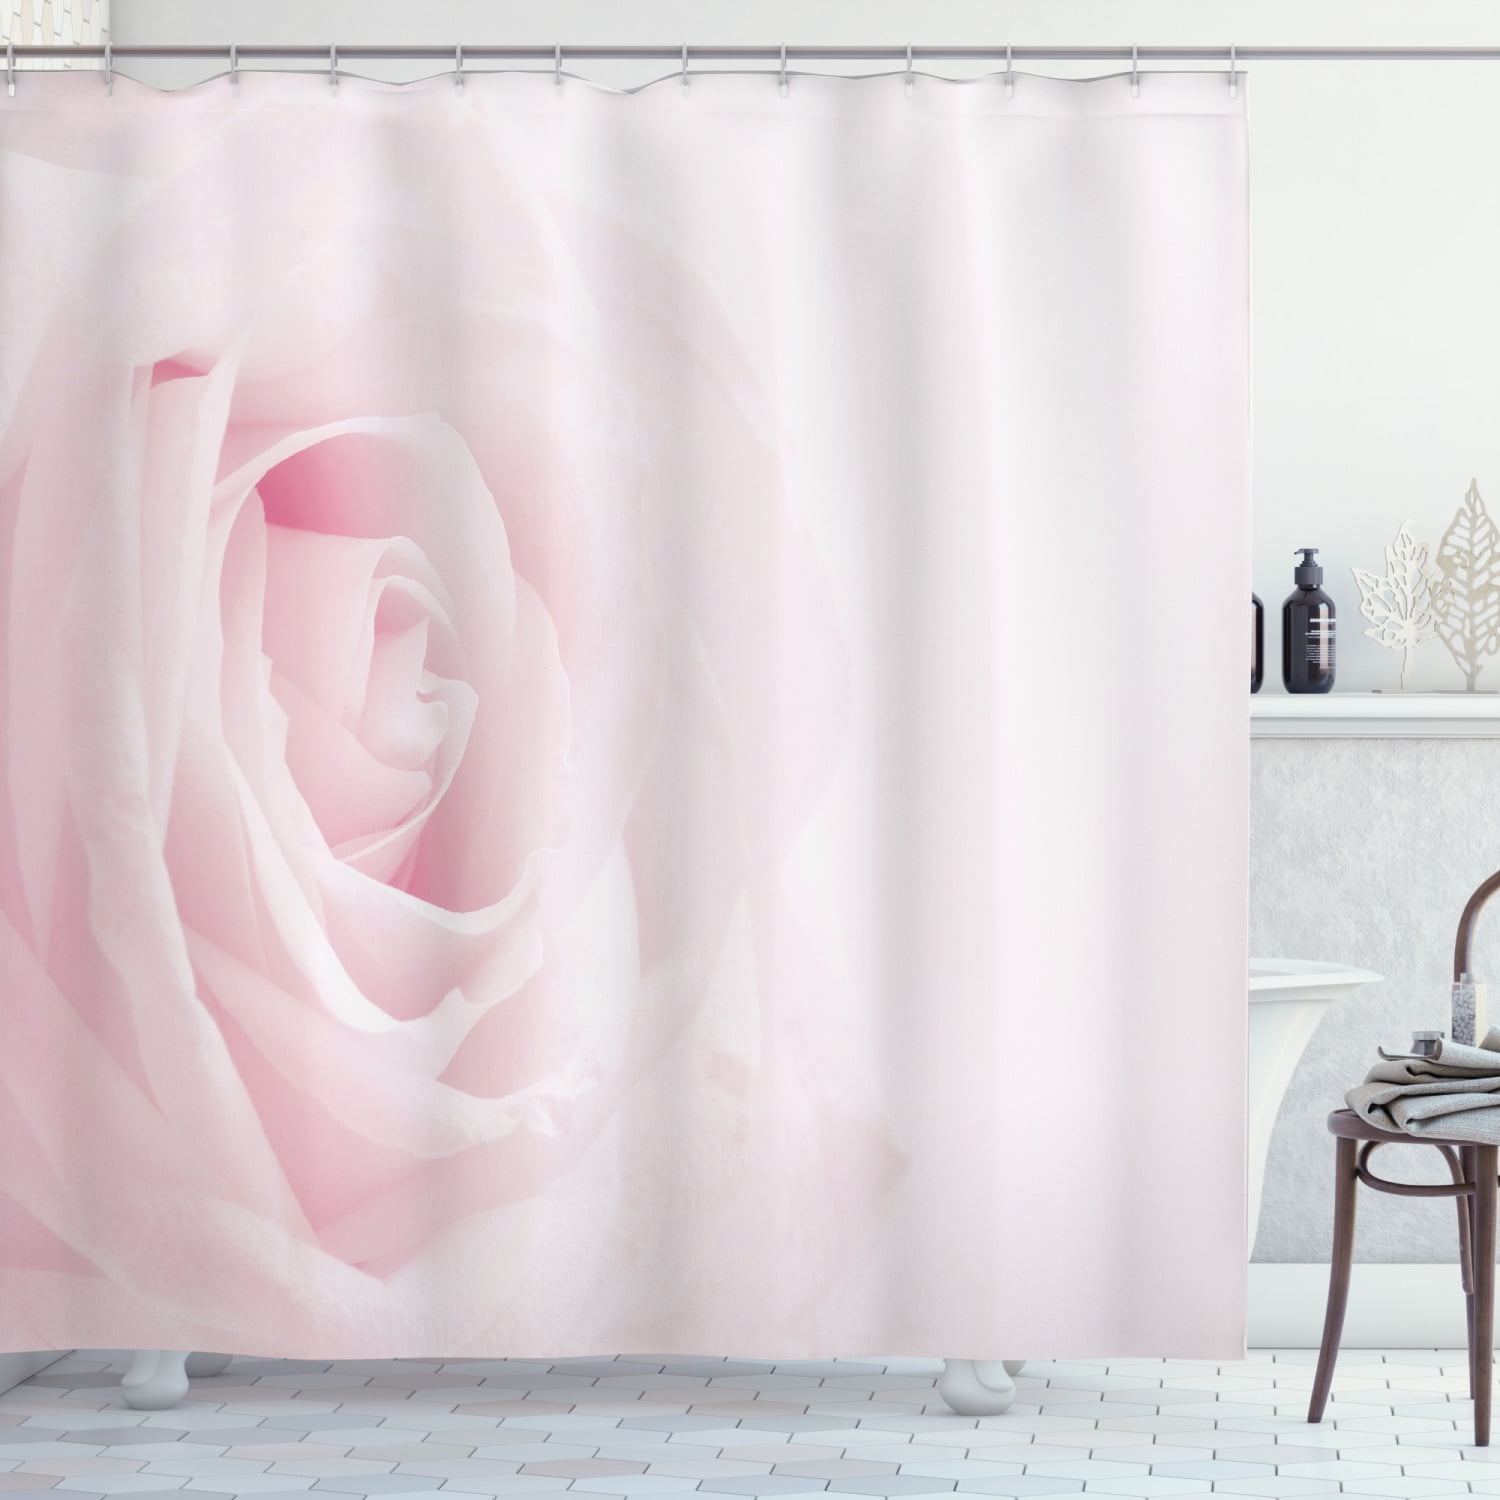 Happy Valentine's Day Truck Flowers Balloons Shower Curtain Sets Bathroom Decor 